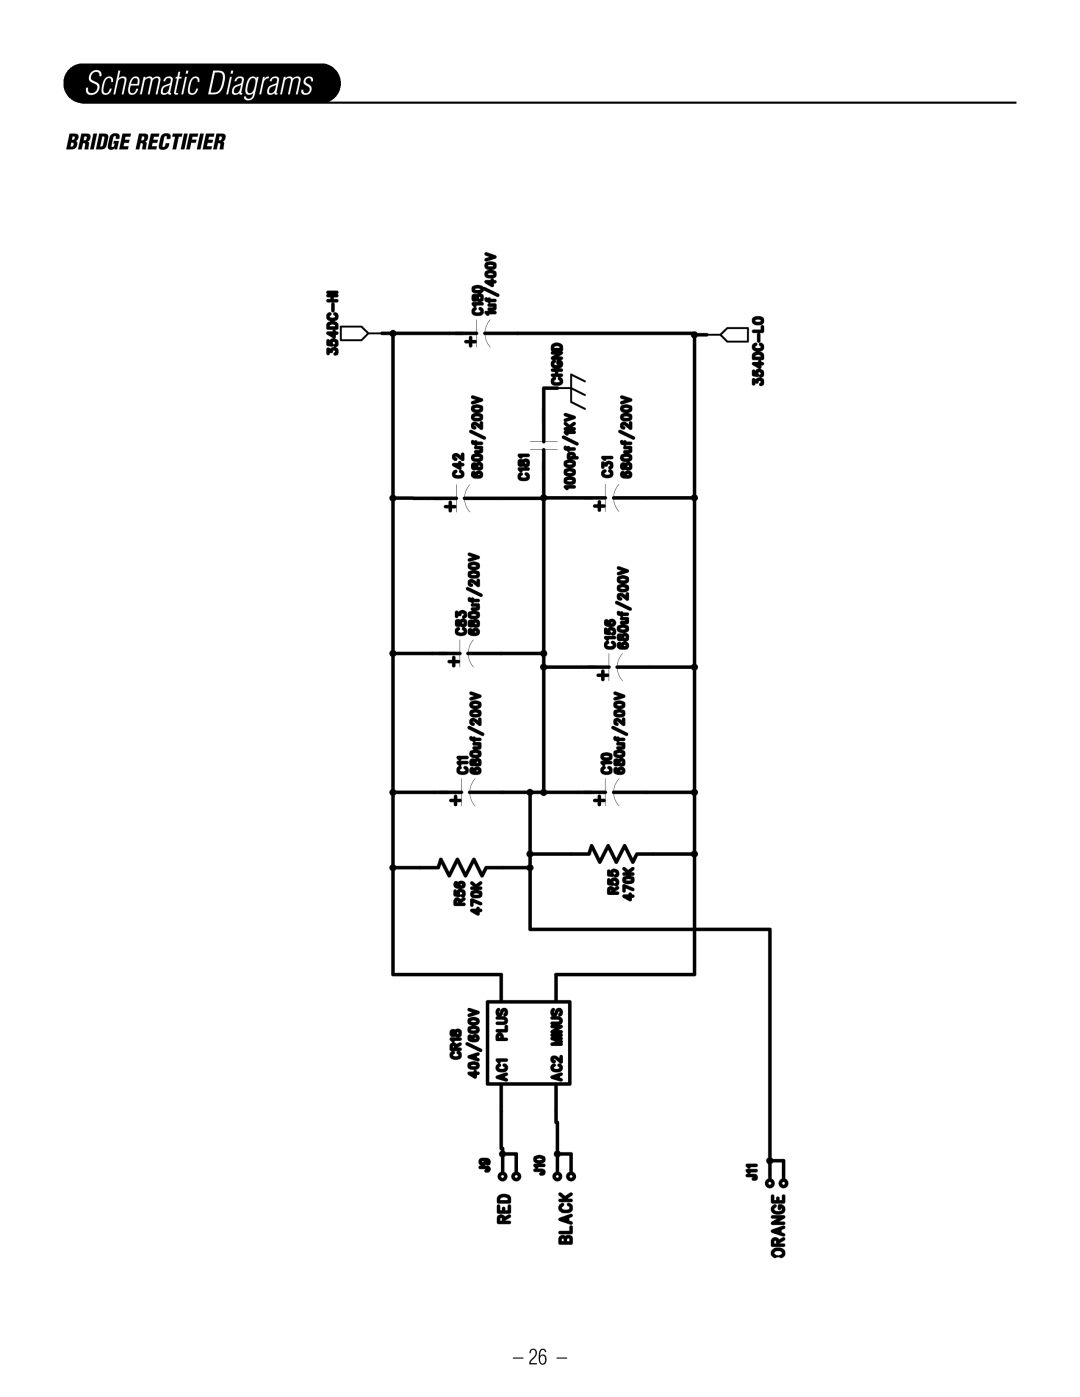 Hafler GX2300CE, GX2600CE manual Schematic Diagrams, Bridge Rectifier 